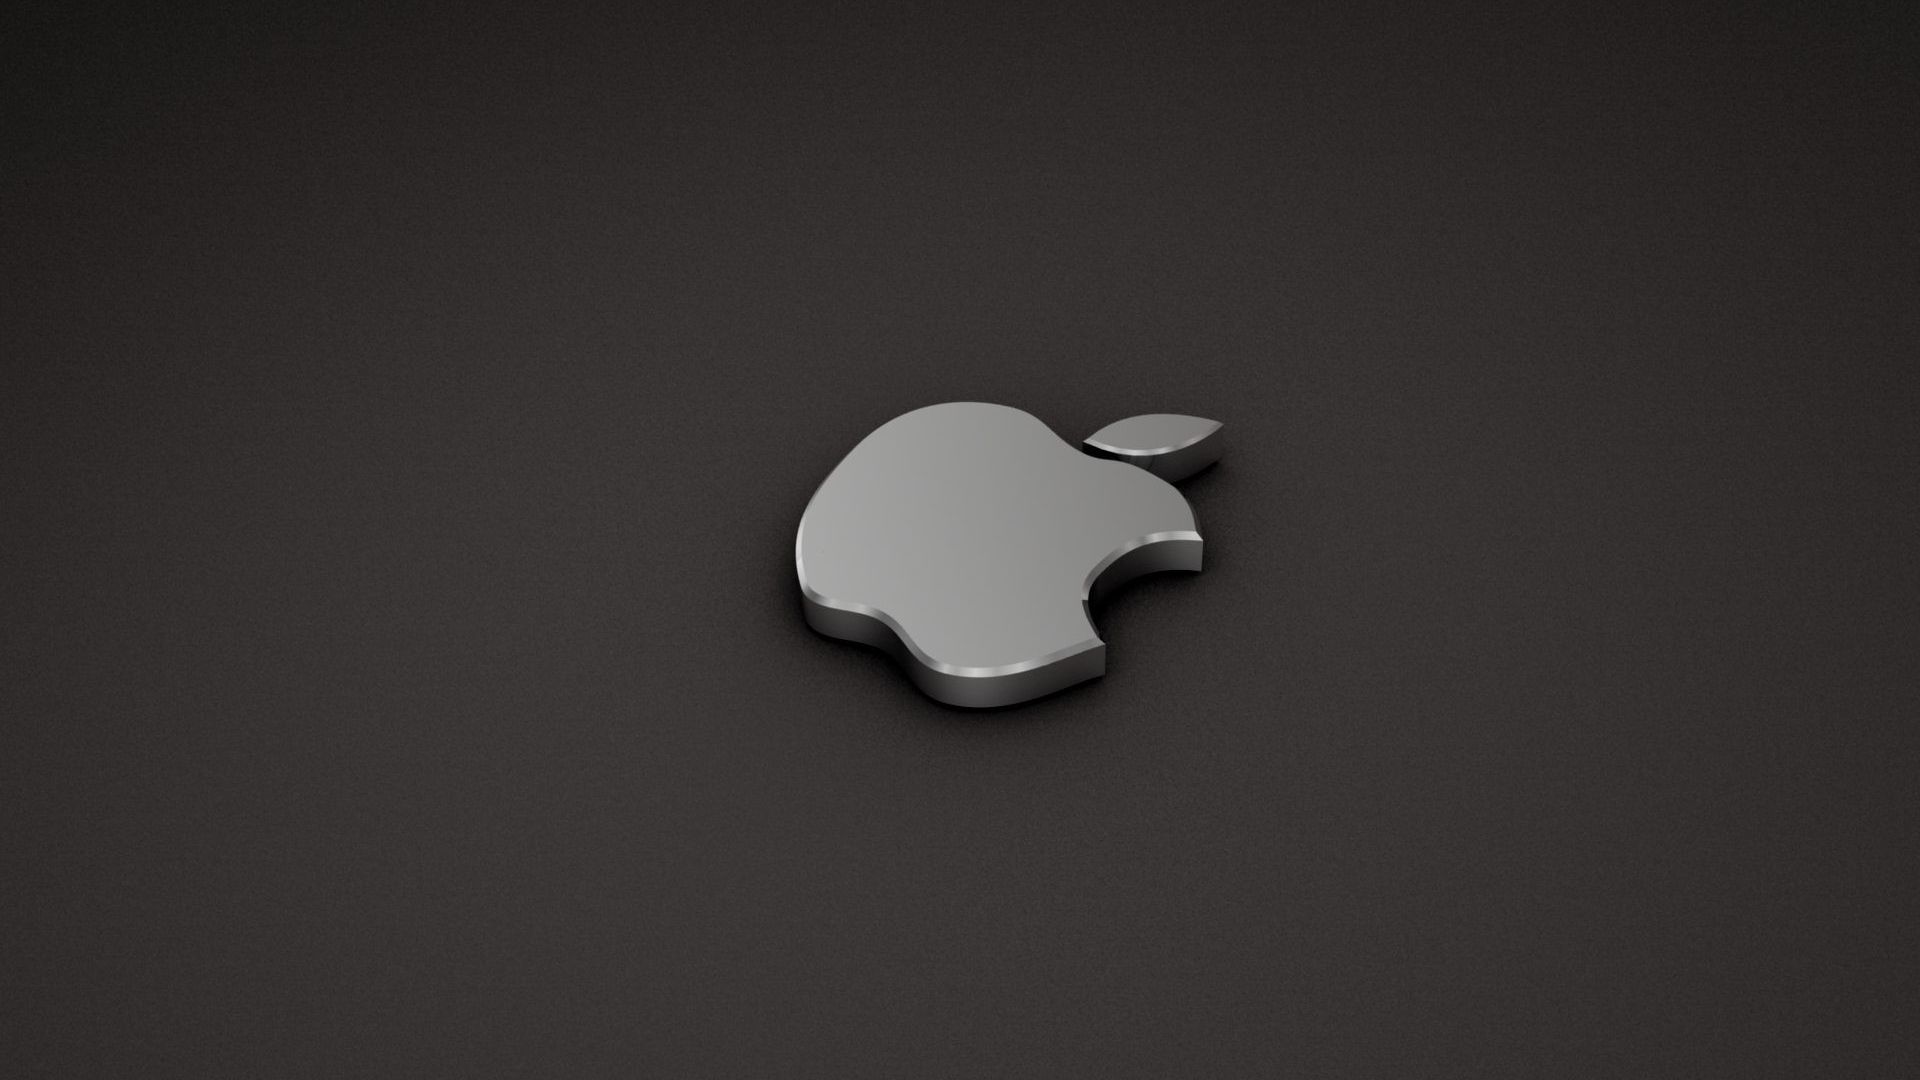 3d Black And White Mac Apple Logo Hd Wallpaper - Mac 3d Wallpaper Black - HD Wallpaper 